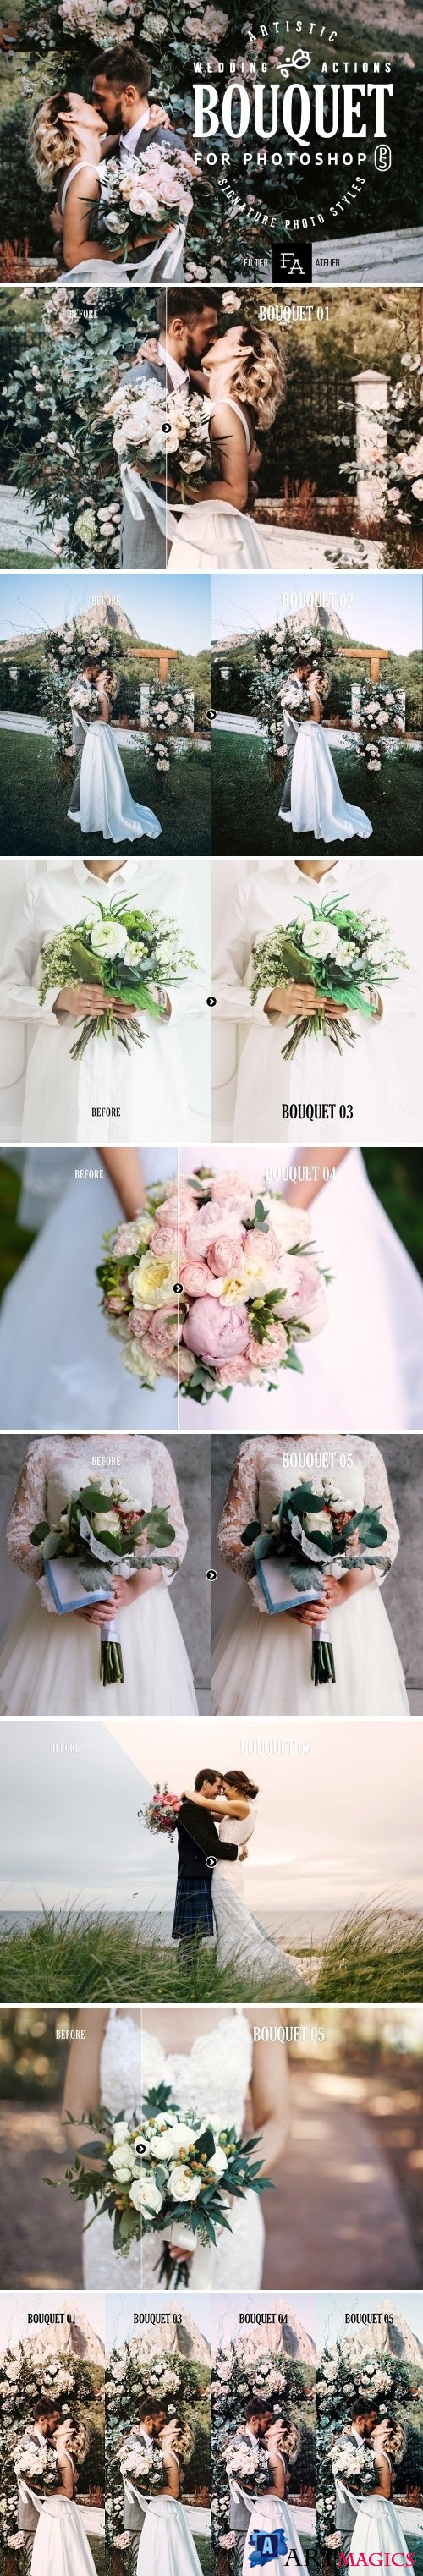 Bouquet Wedding Photoshop Actions 2170025